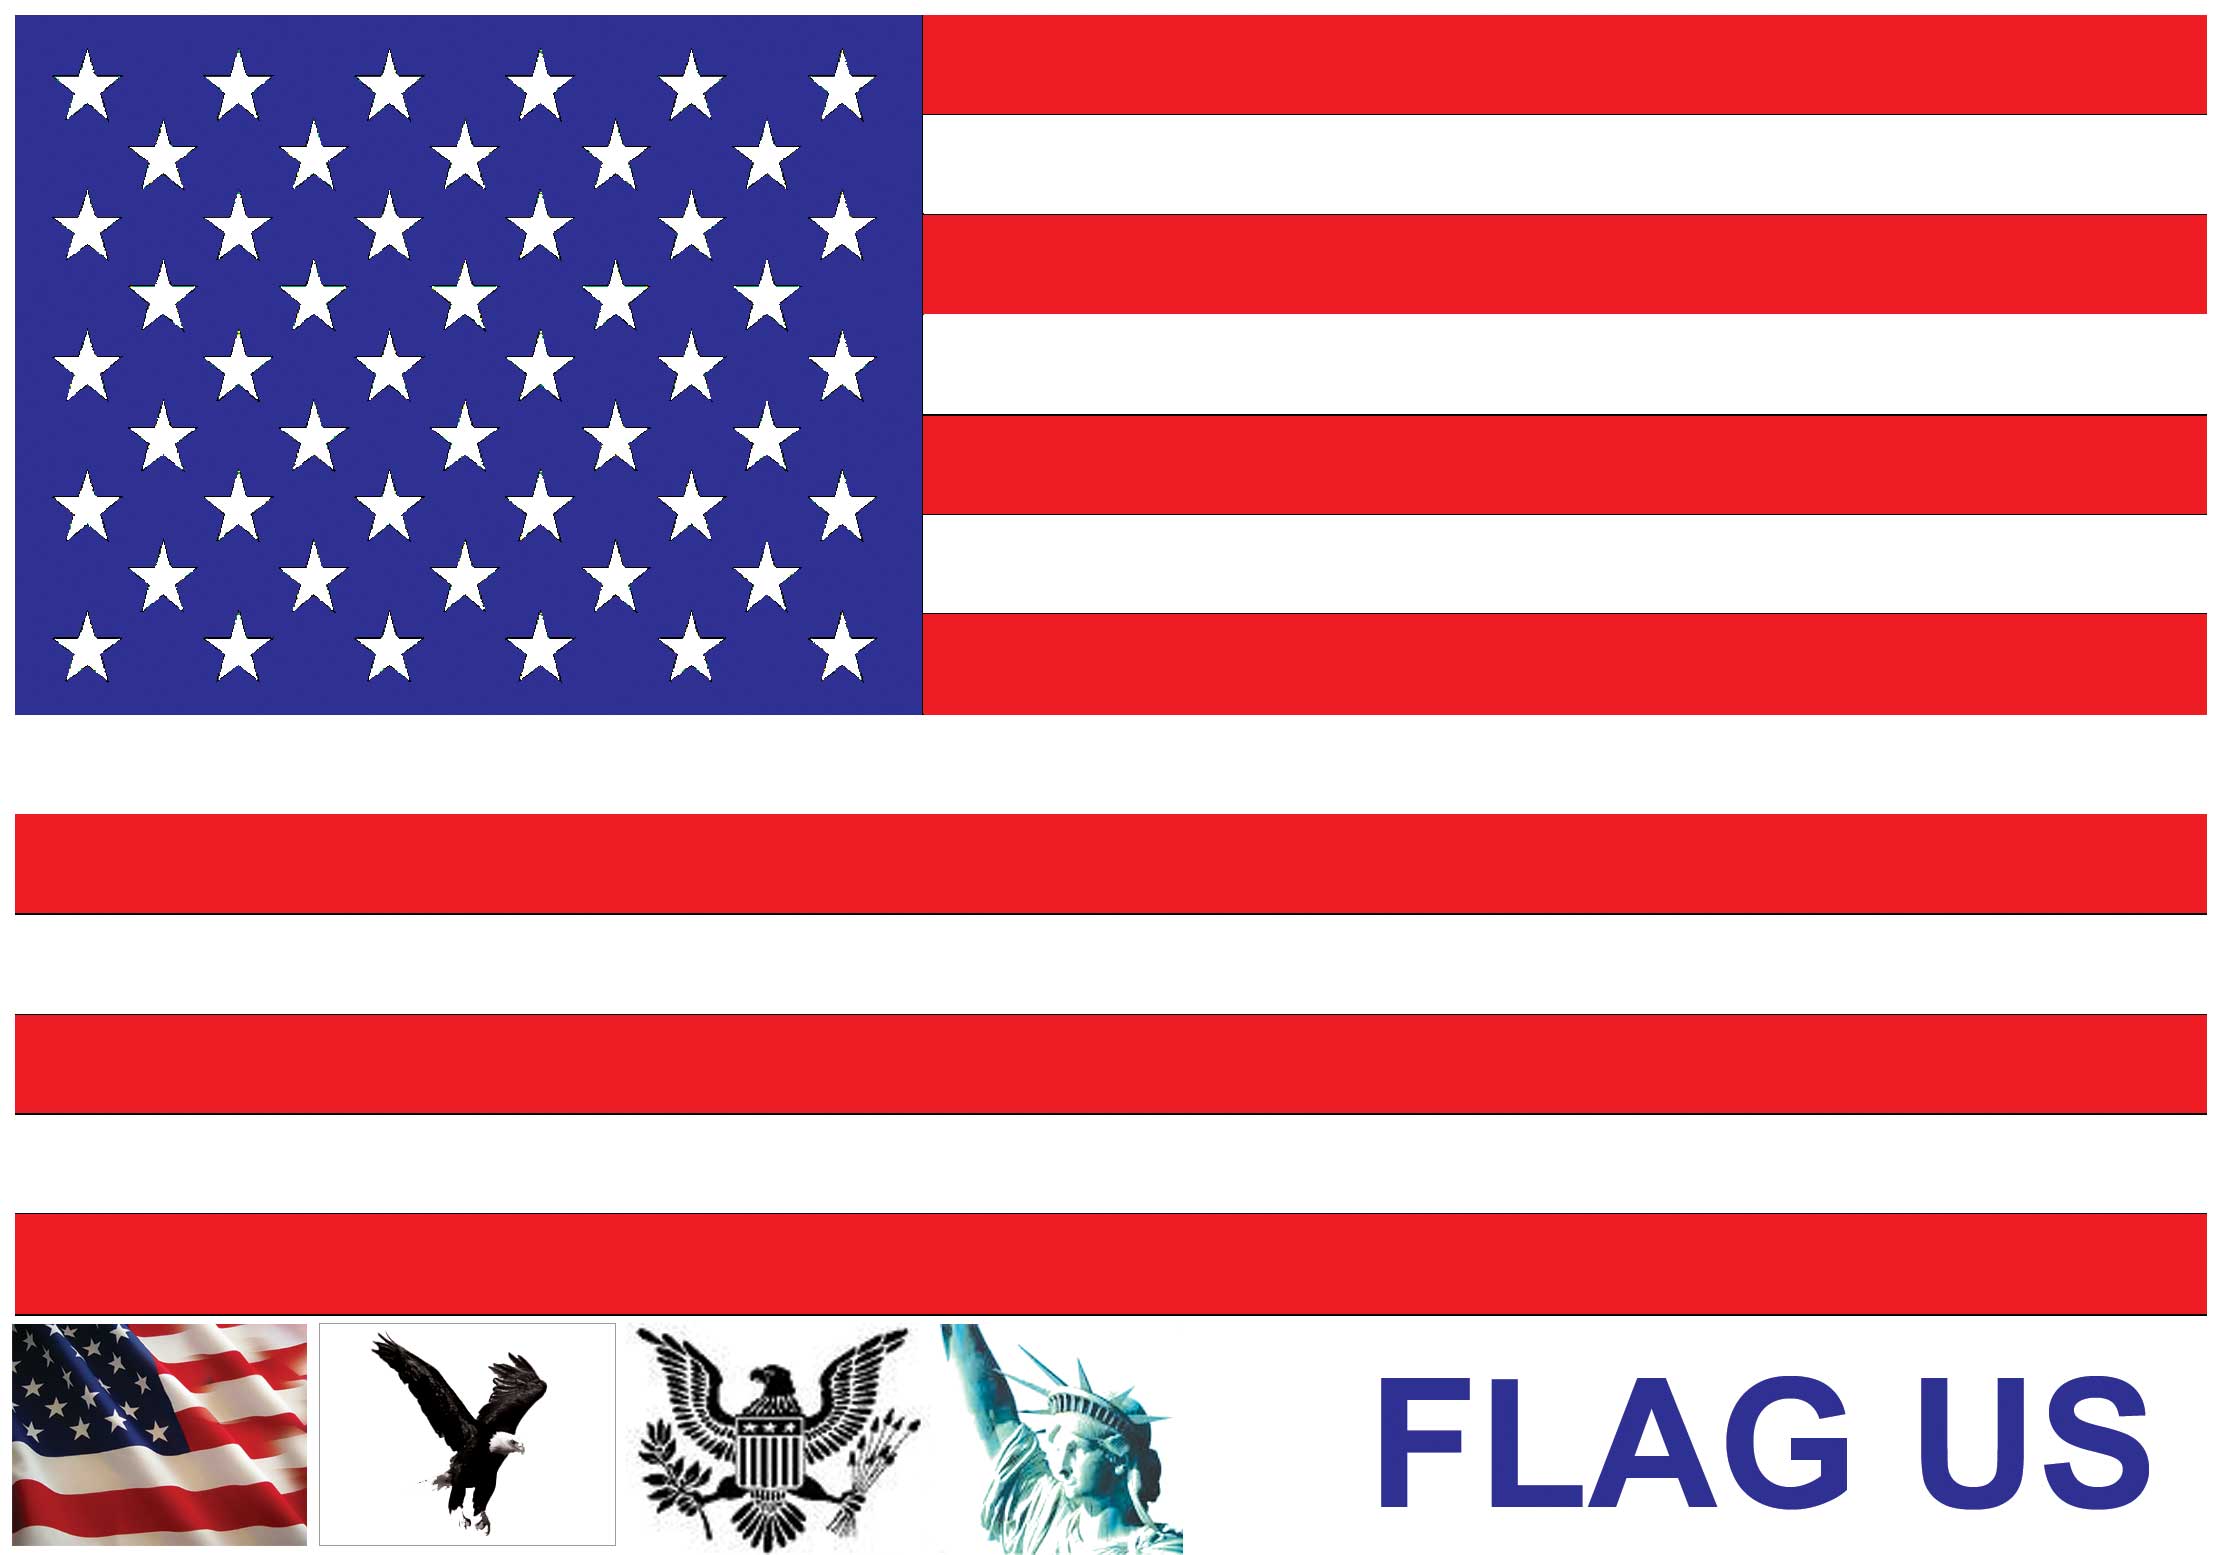 Flag US: American flag